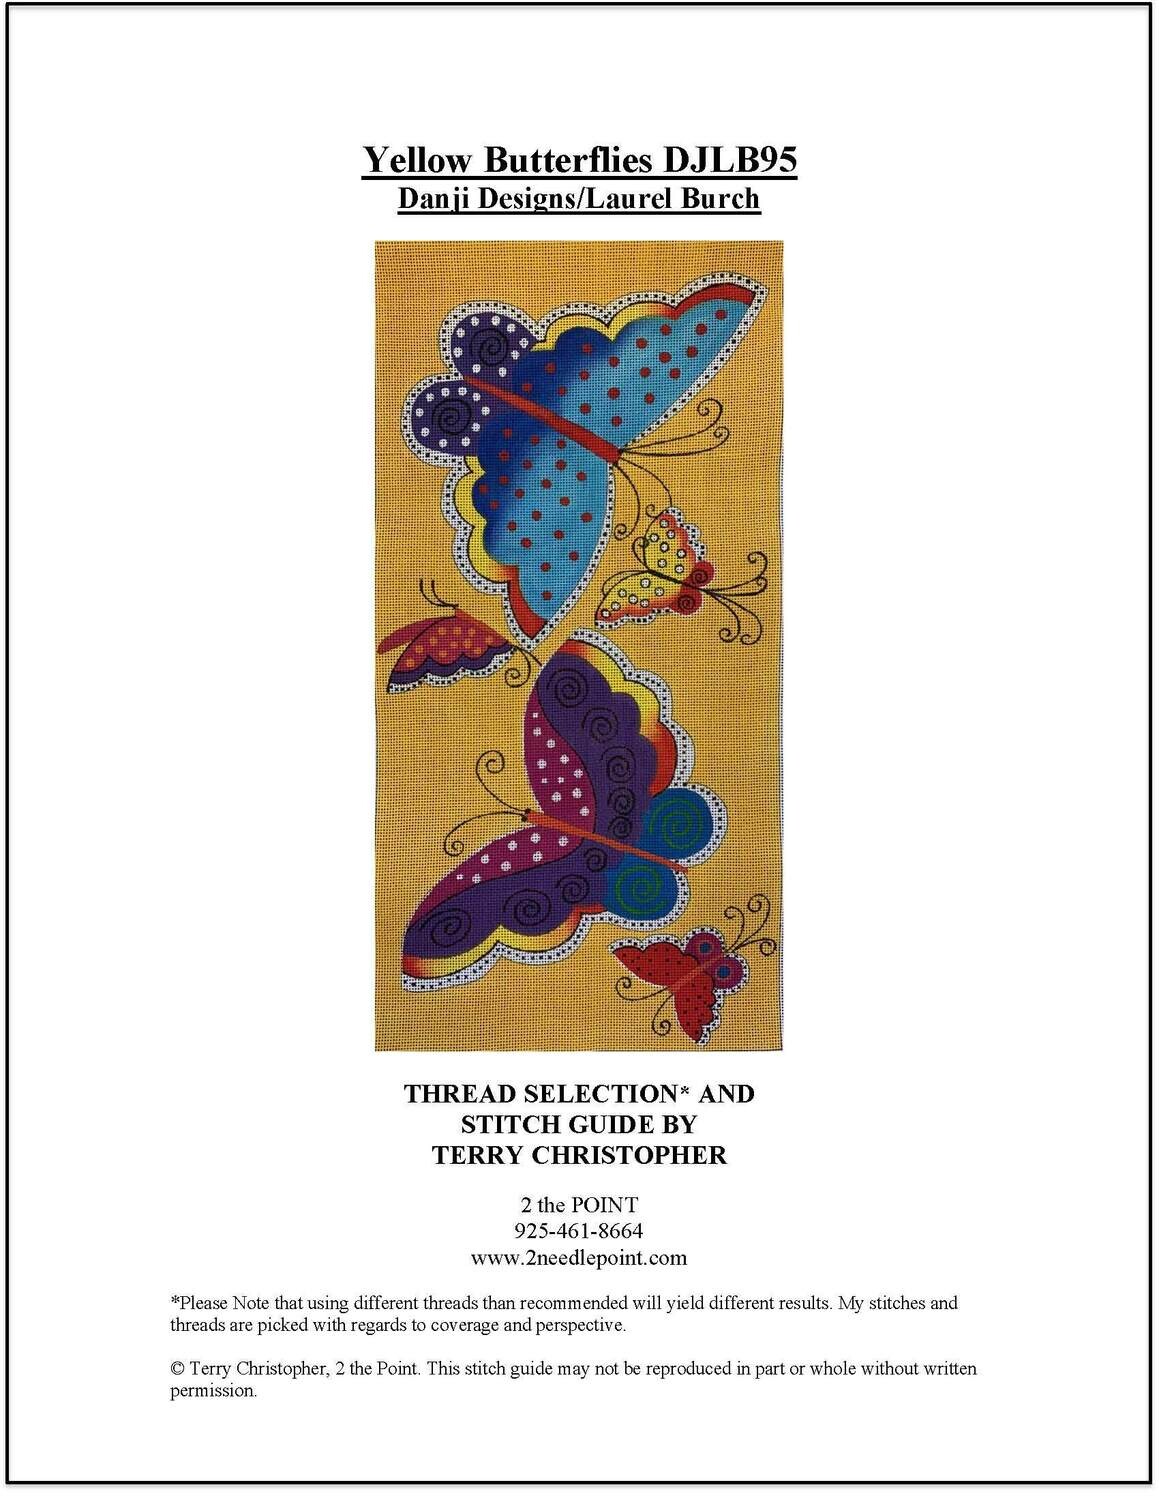 Danji/Laurel Birch, Yellow Butterflies Stitch Guide DJLB95